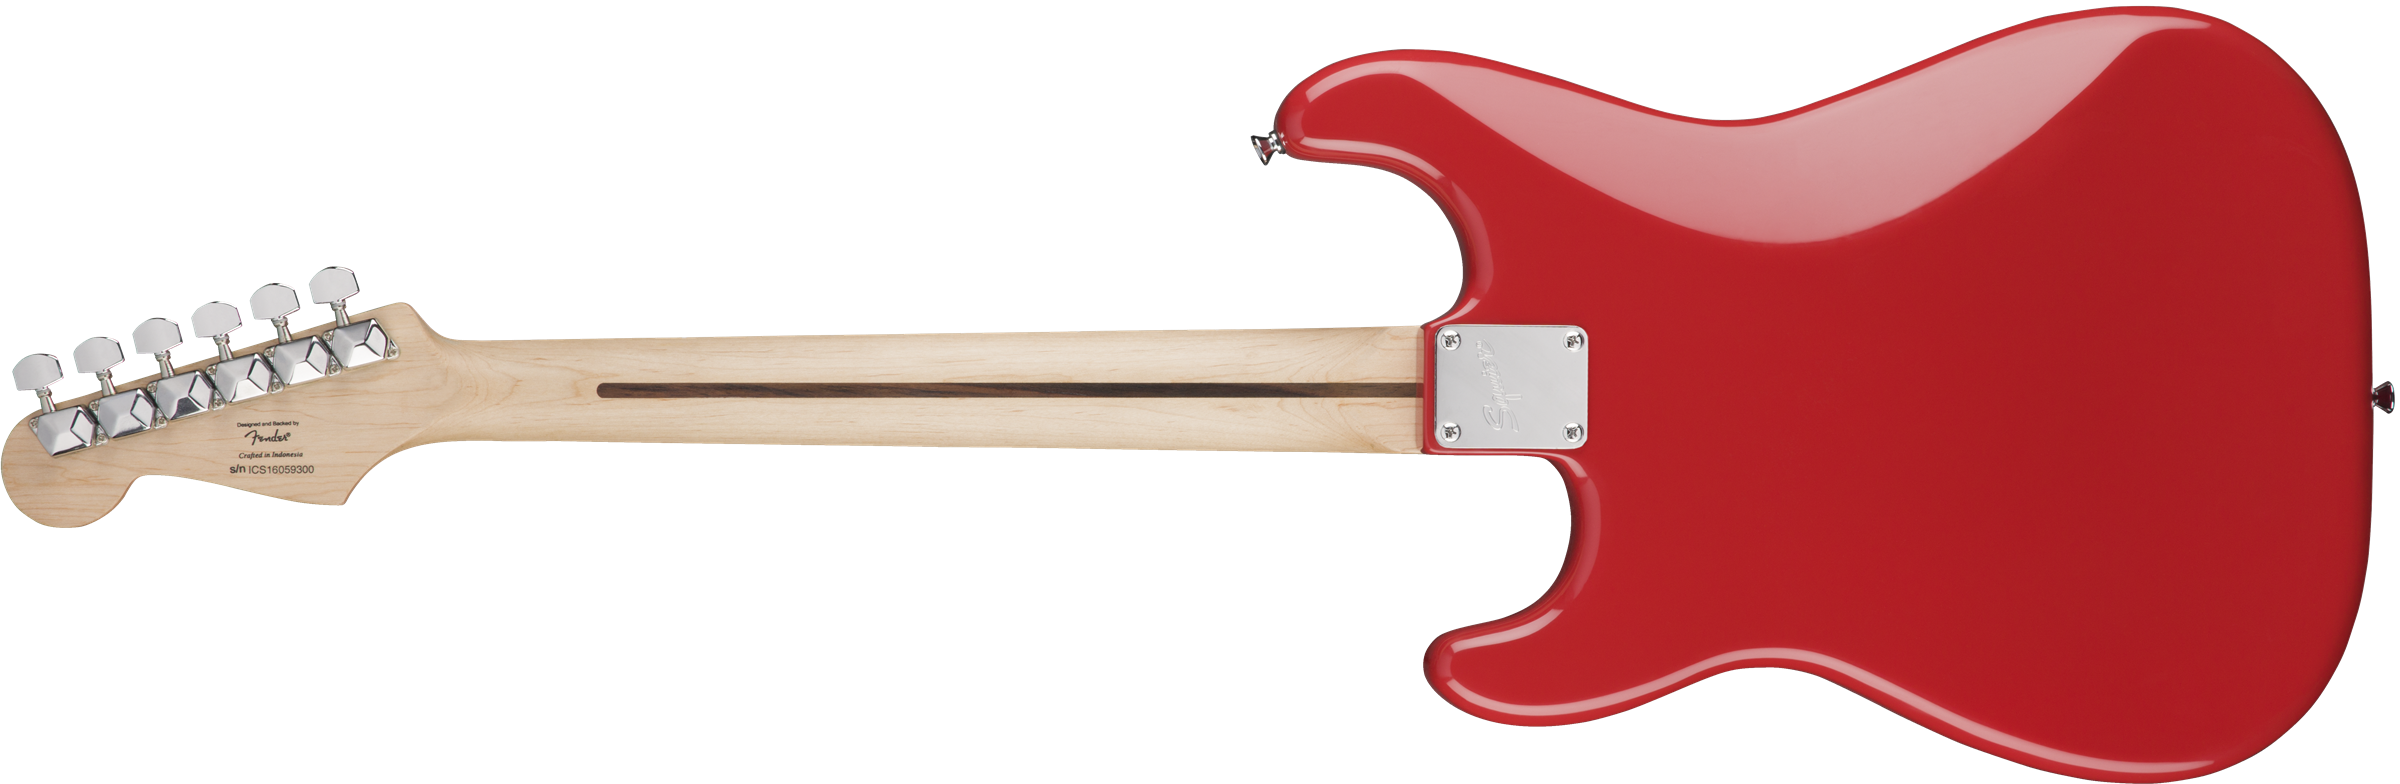 Squier Bullet Stratocaster Ht Sss (lau) - Fiesta Red - Guitare Électrique Forme Str - Variation 1